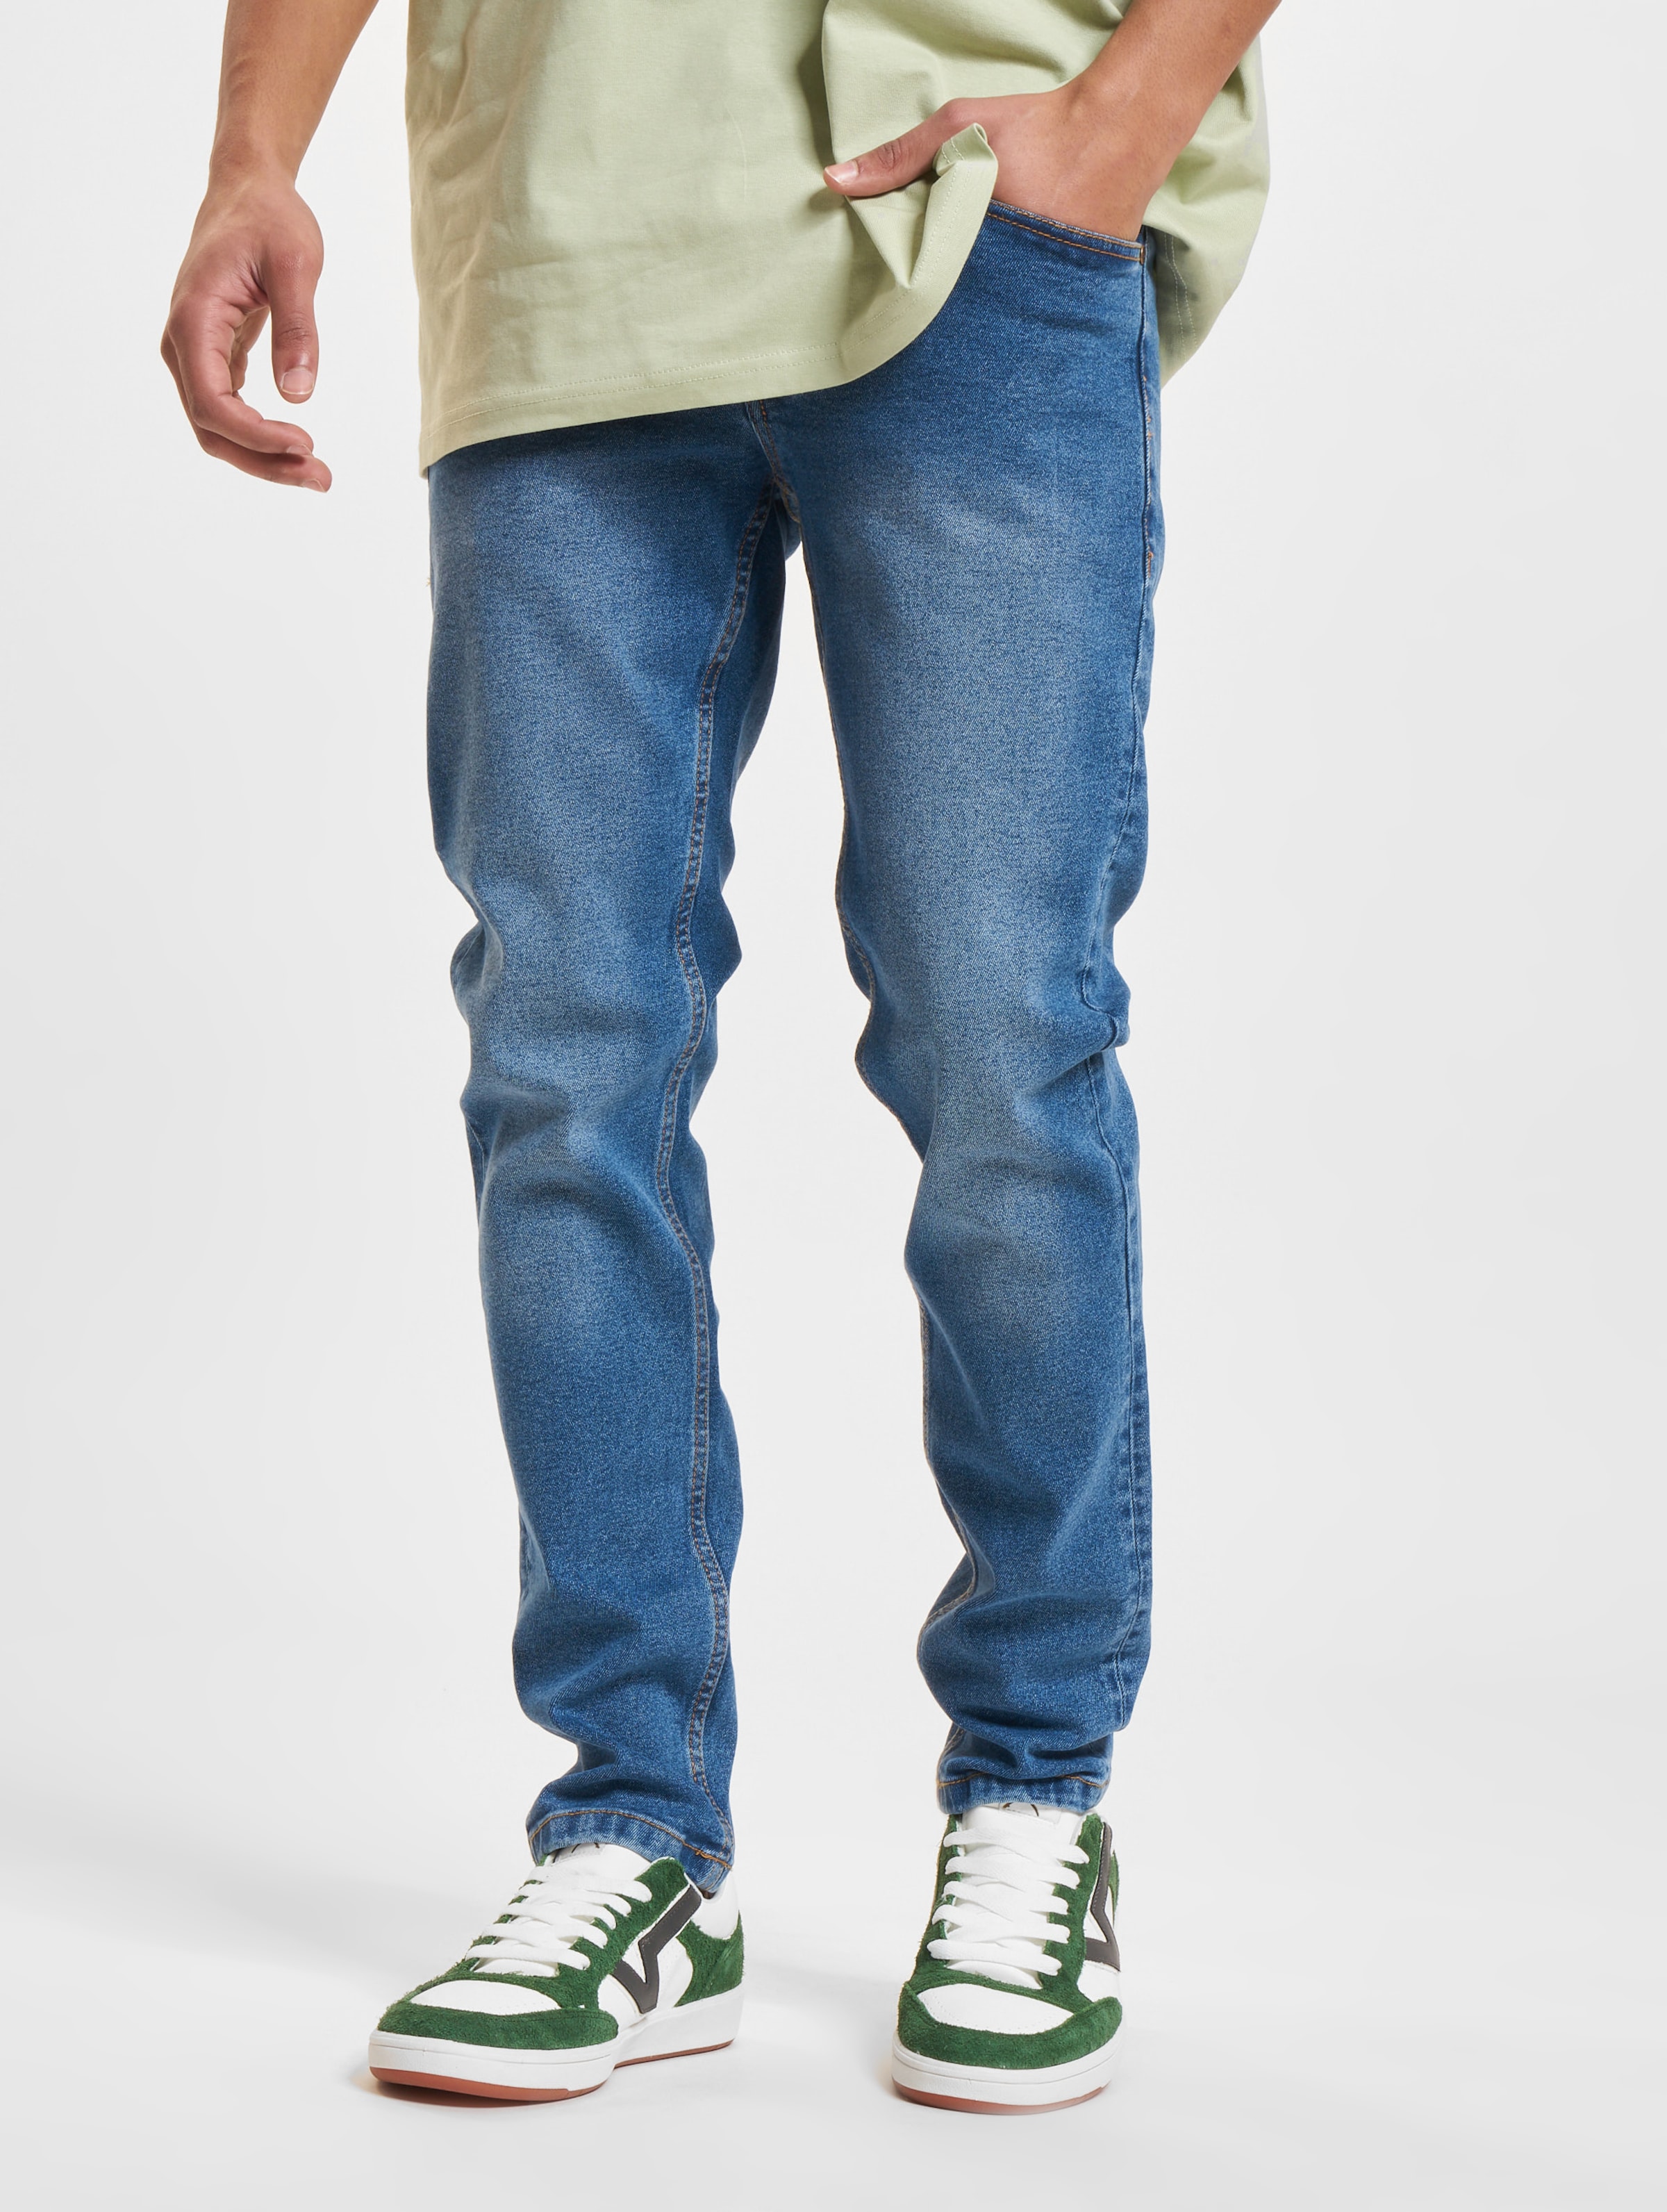 Denim Project Mr. Red Skinny Fit Jeans Mannen op kleur blauw, Maat 3032